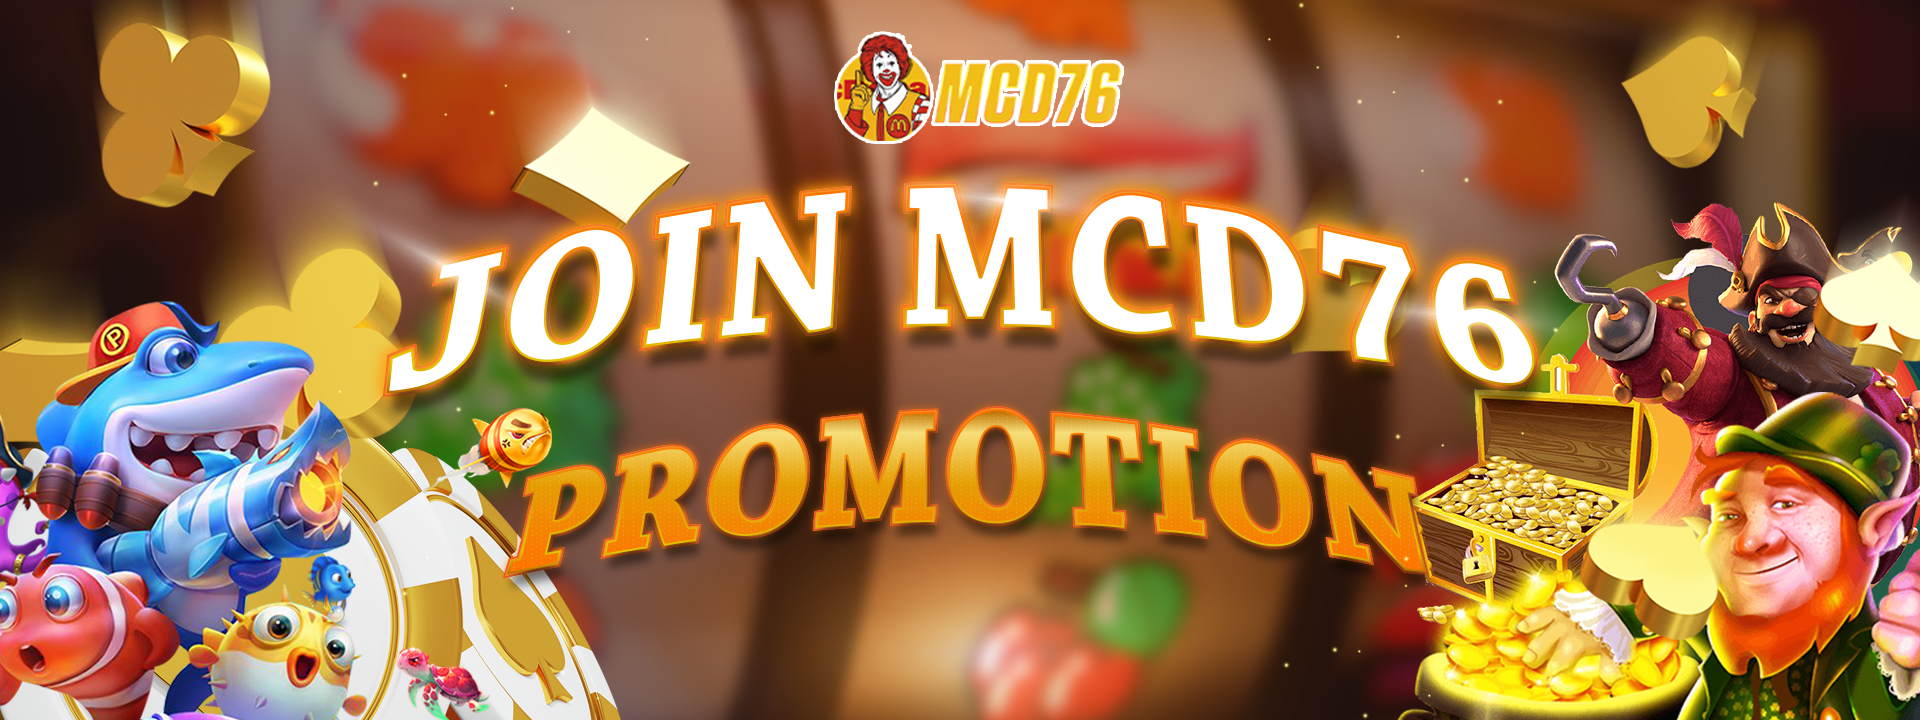 Join MCD76 Promotion